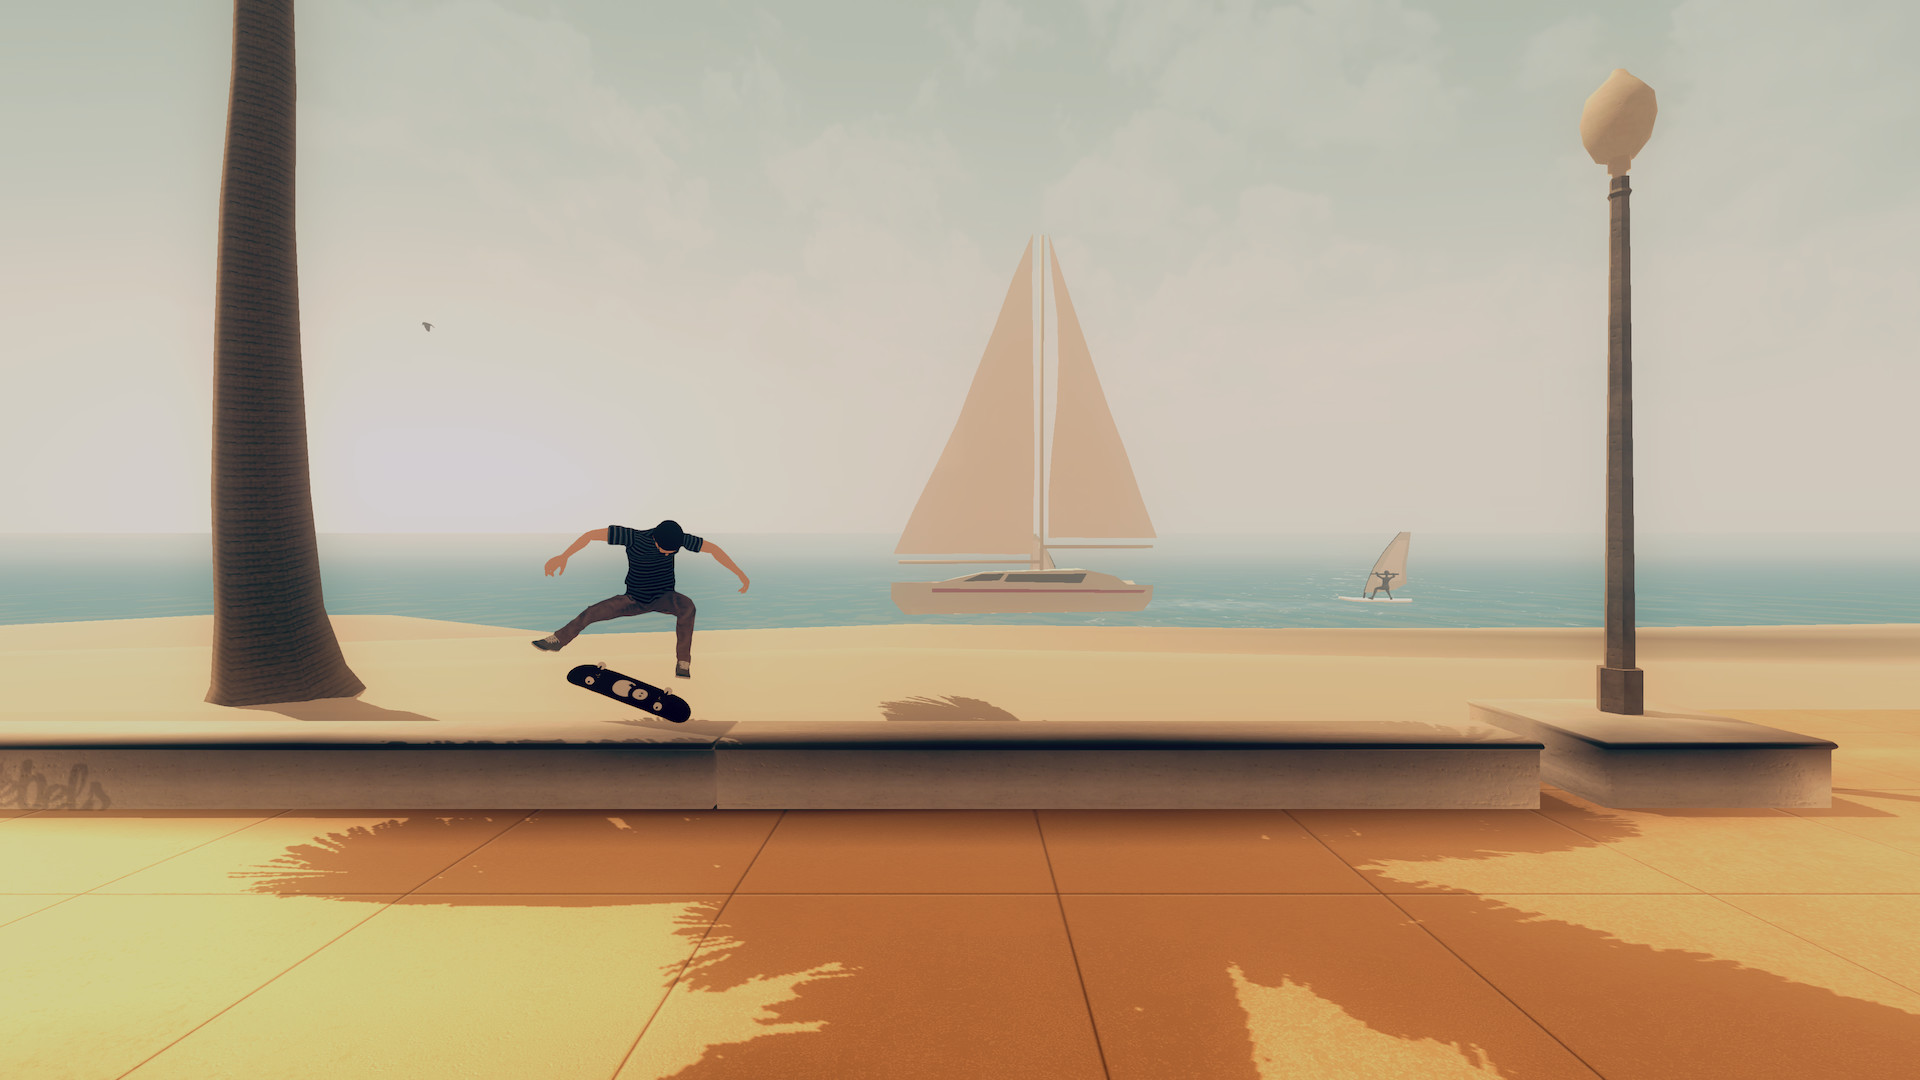 Skate Shop Simulator on Steam